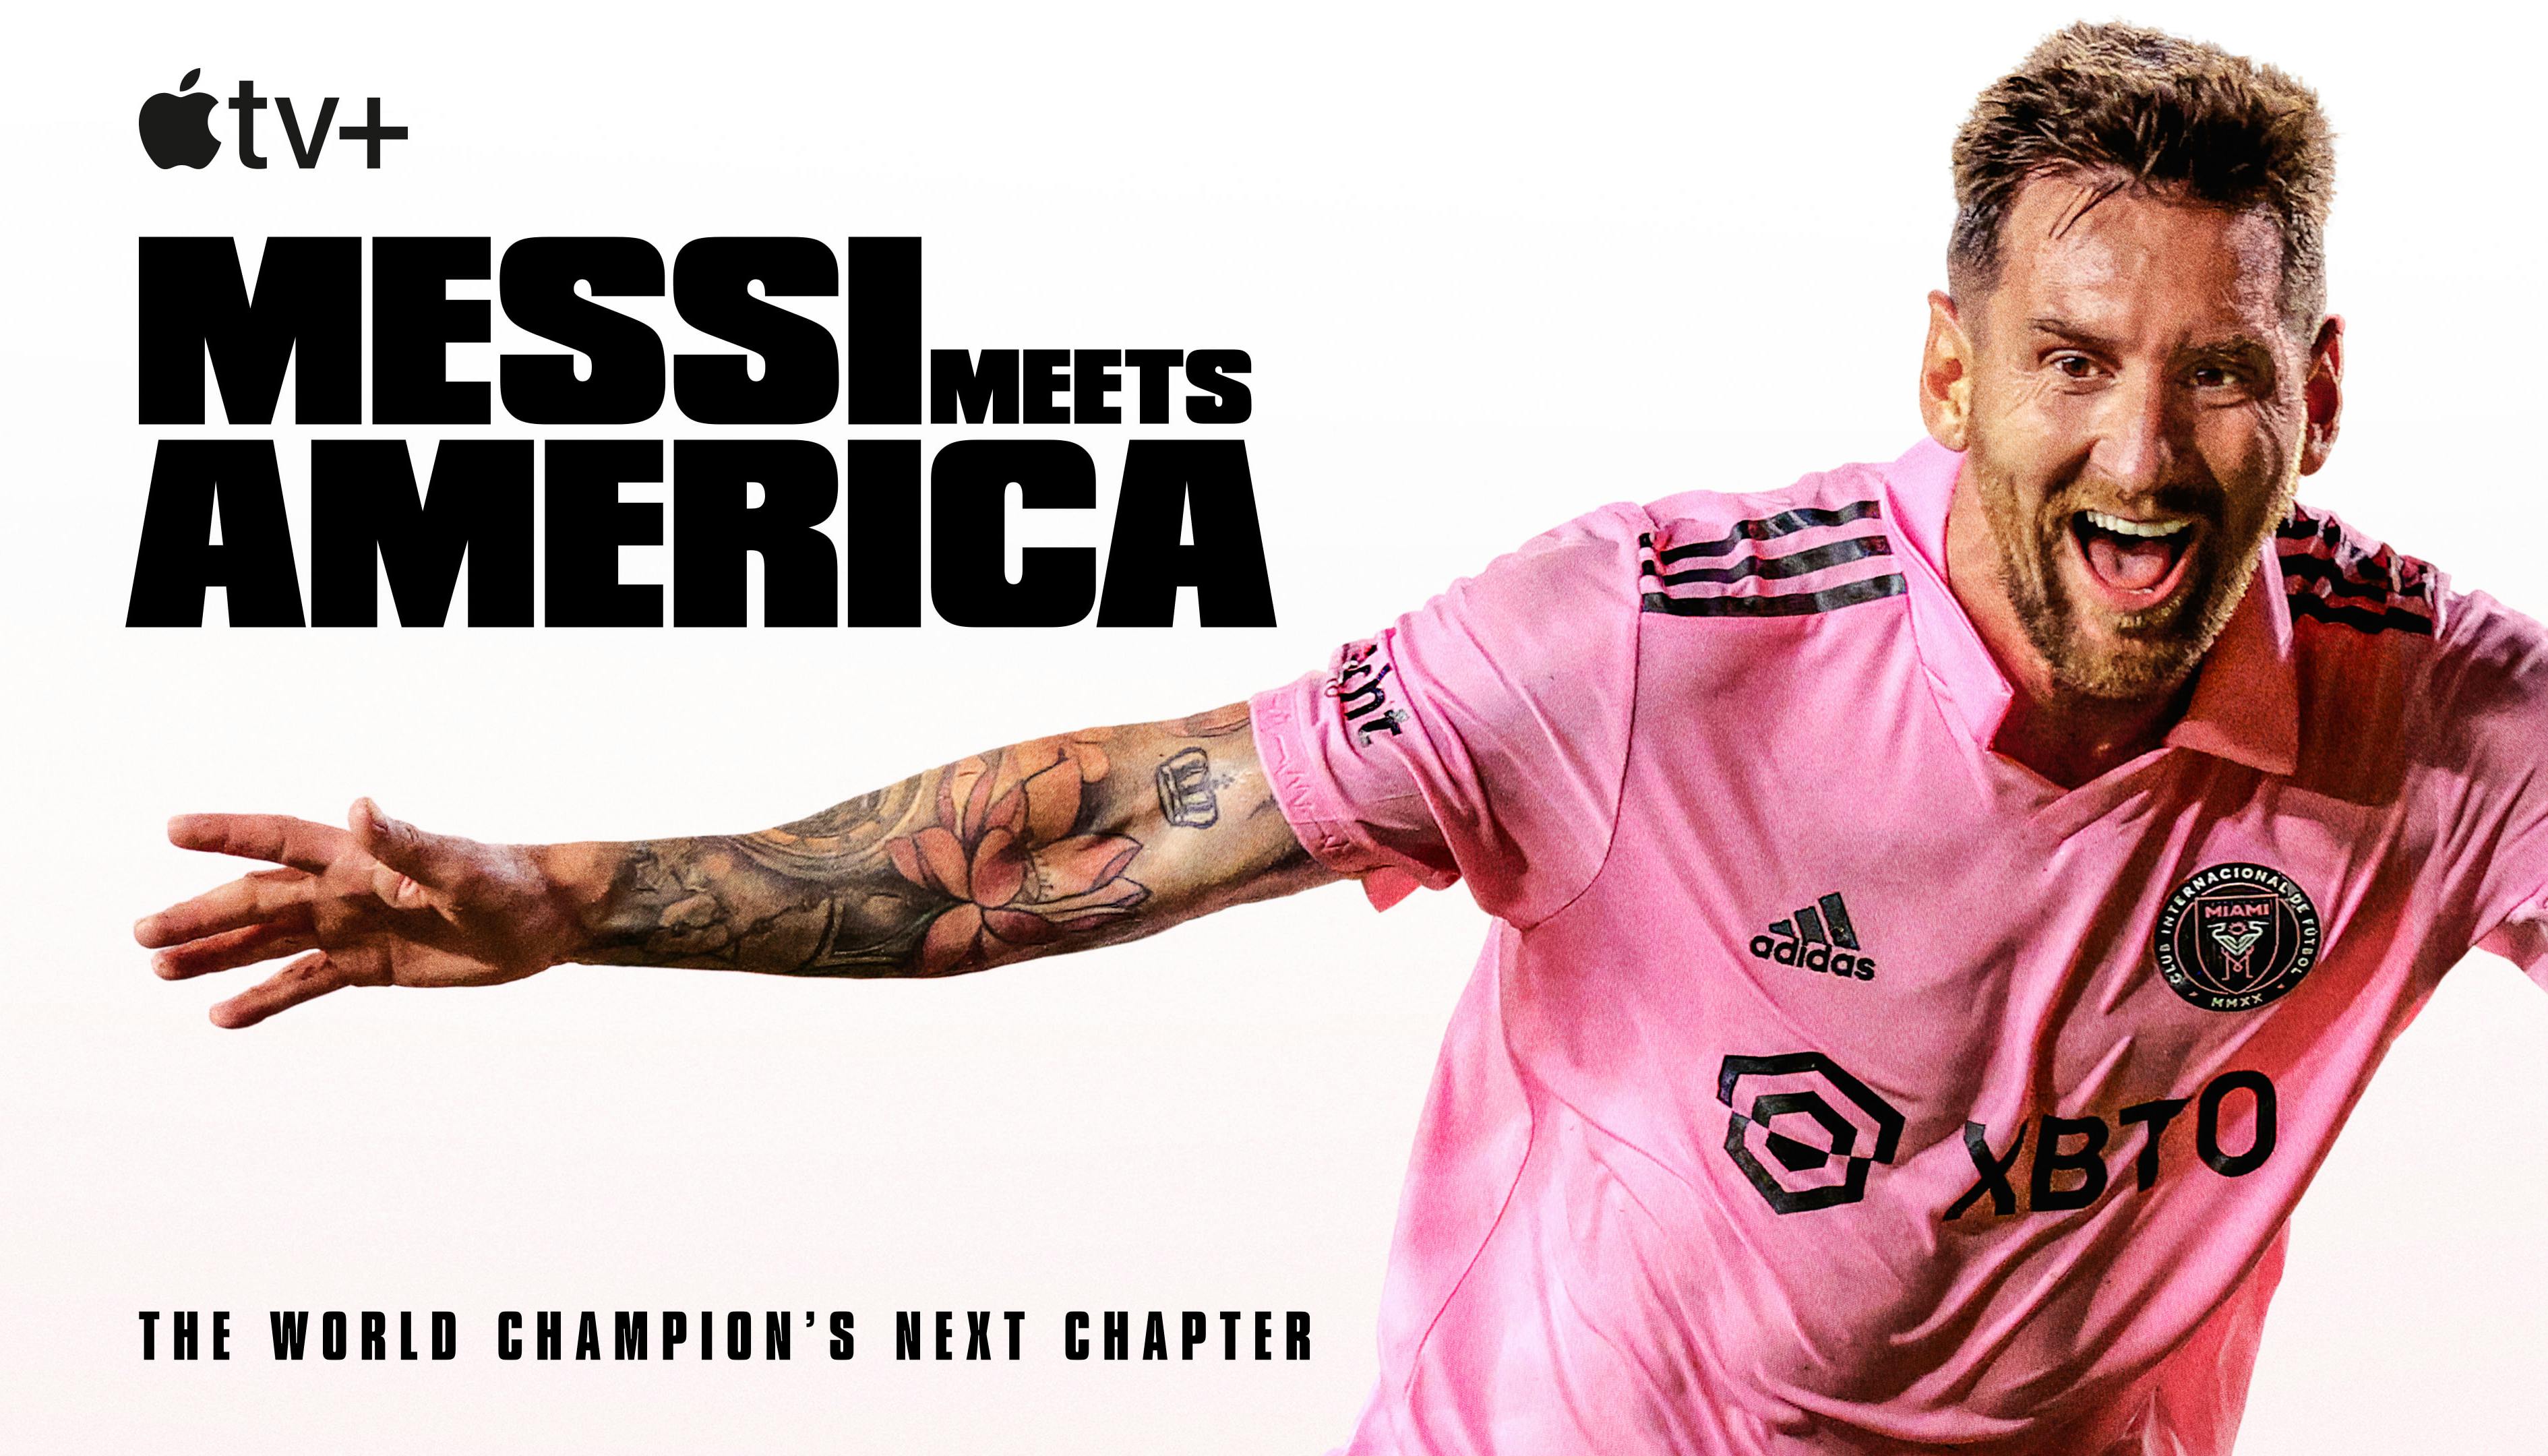 Messi meets America